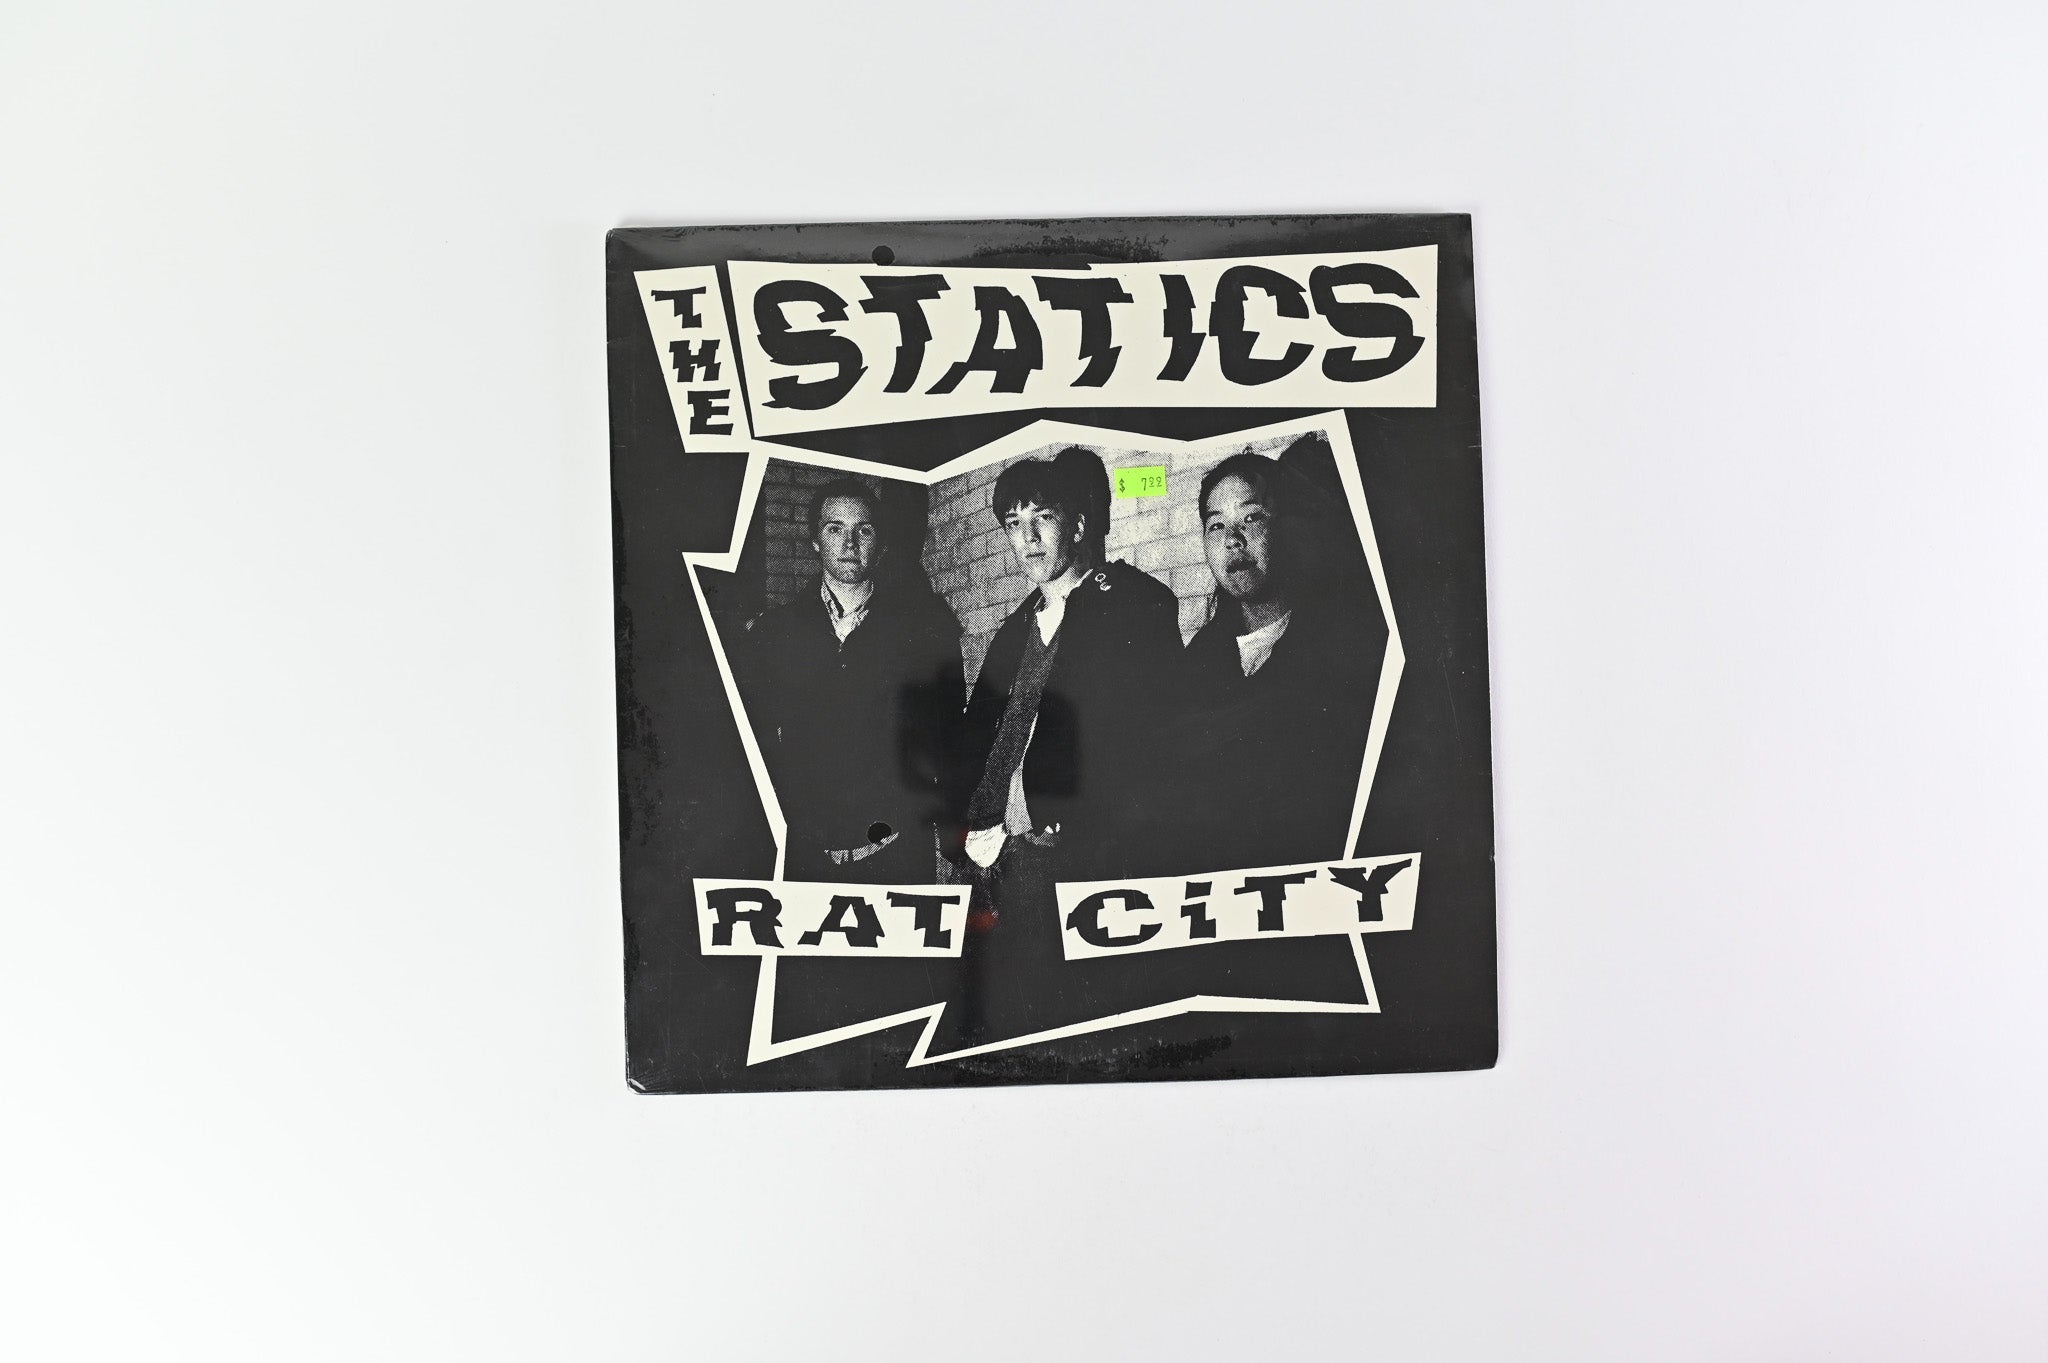 The Statics - Rat City on Rip Off Records - Sealed